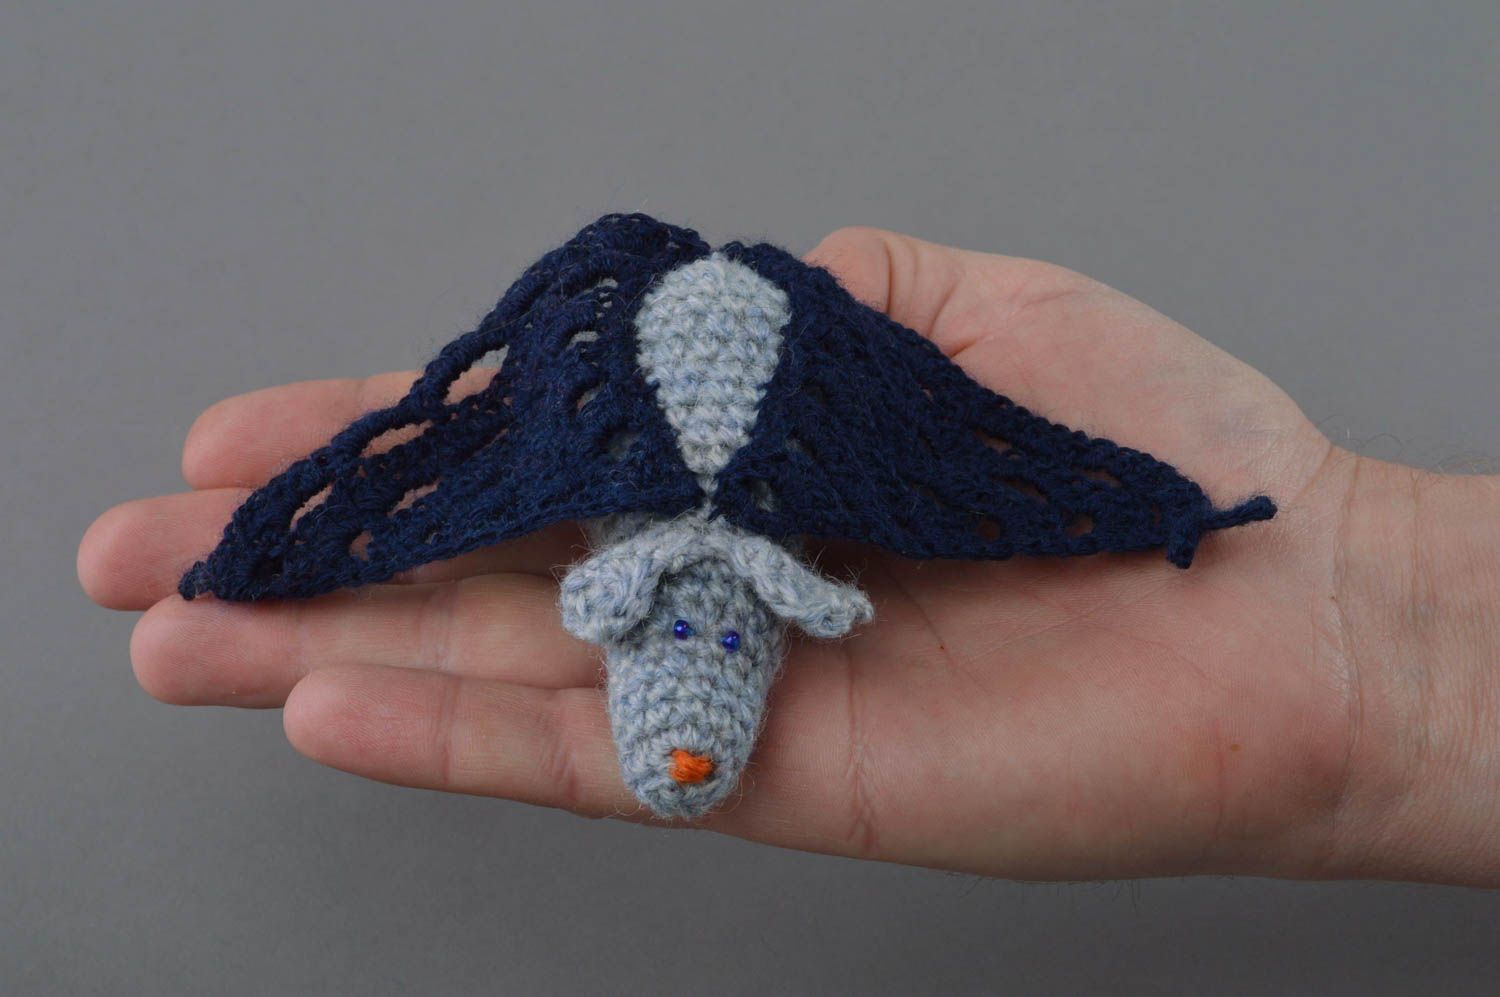 Handmade crocheted toy blue bat small cute baby doll nursery decor ideas photo 4